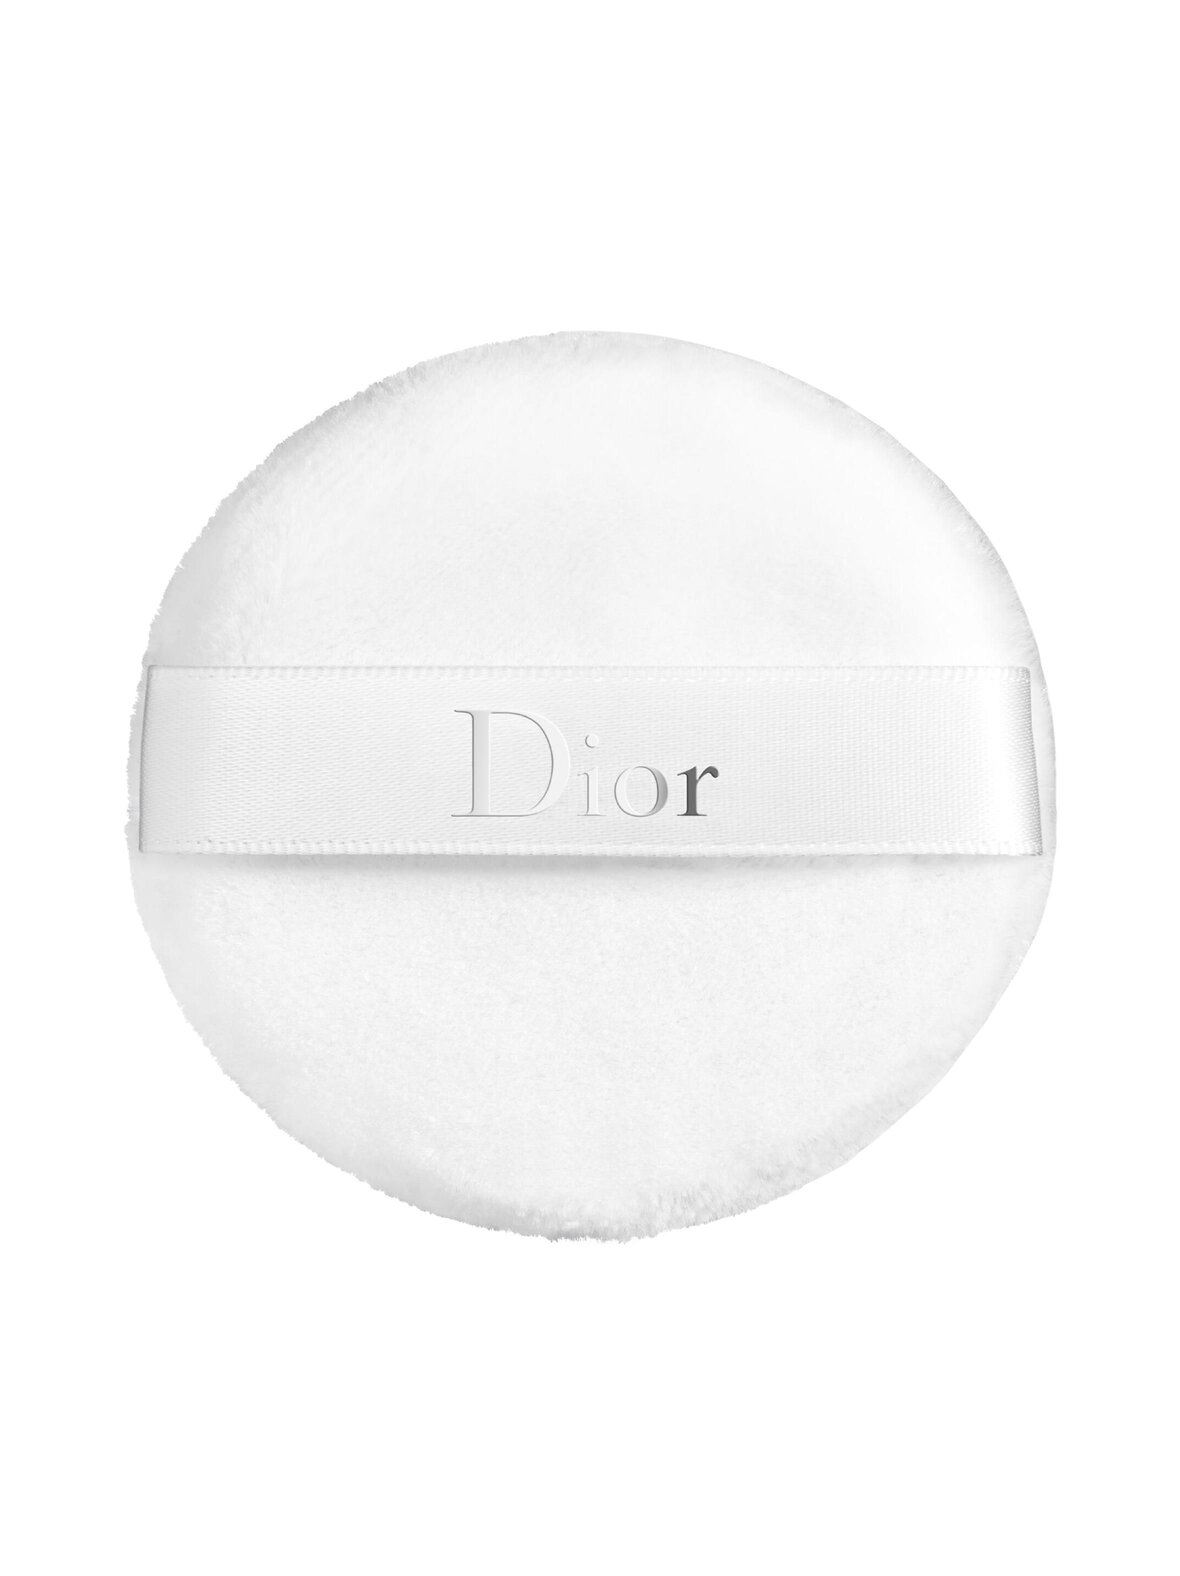 Dior Capture totale dreamskin cushion sponge -sienilevitin